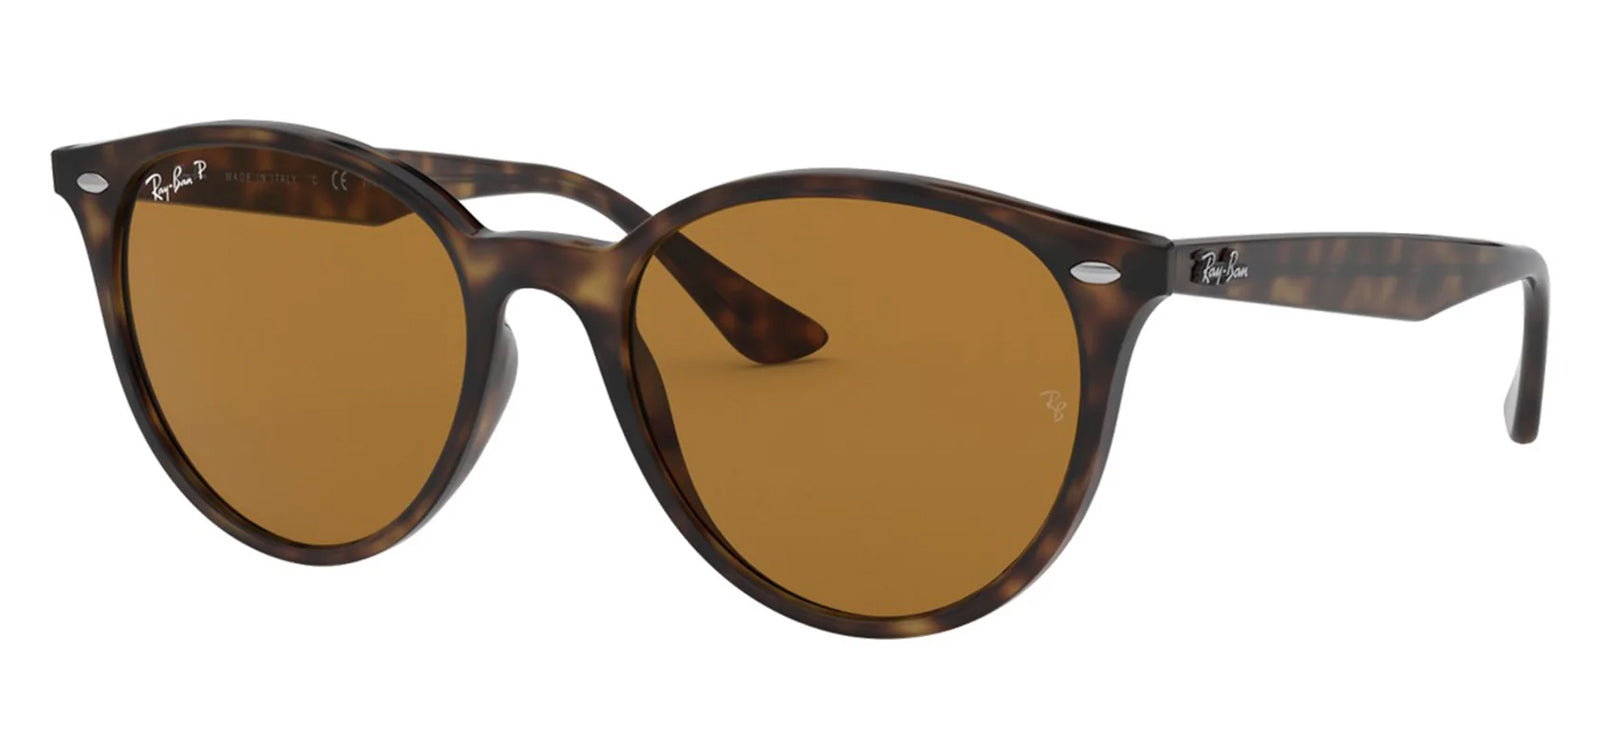 
Ray-Ban RB4305 Adult Lifestyle Polarized Sunglasses 